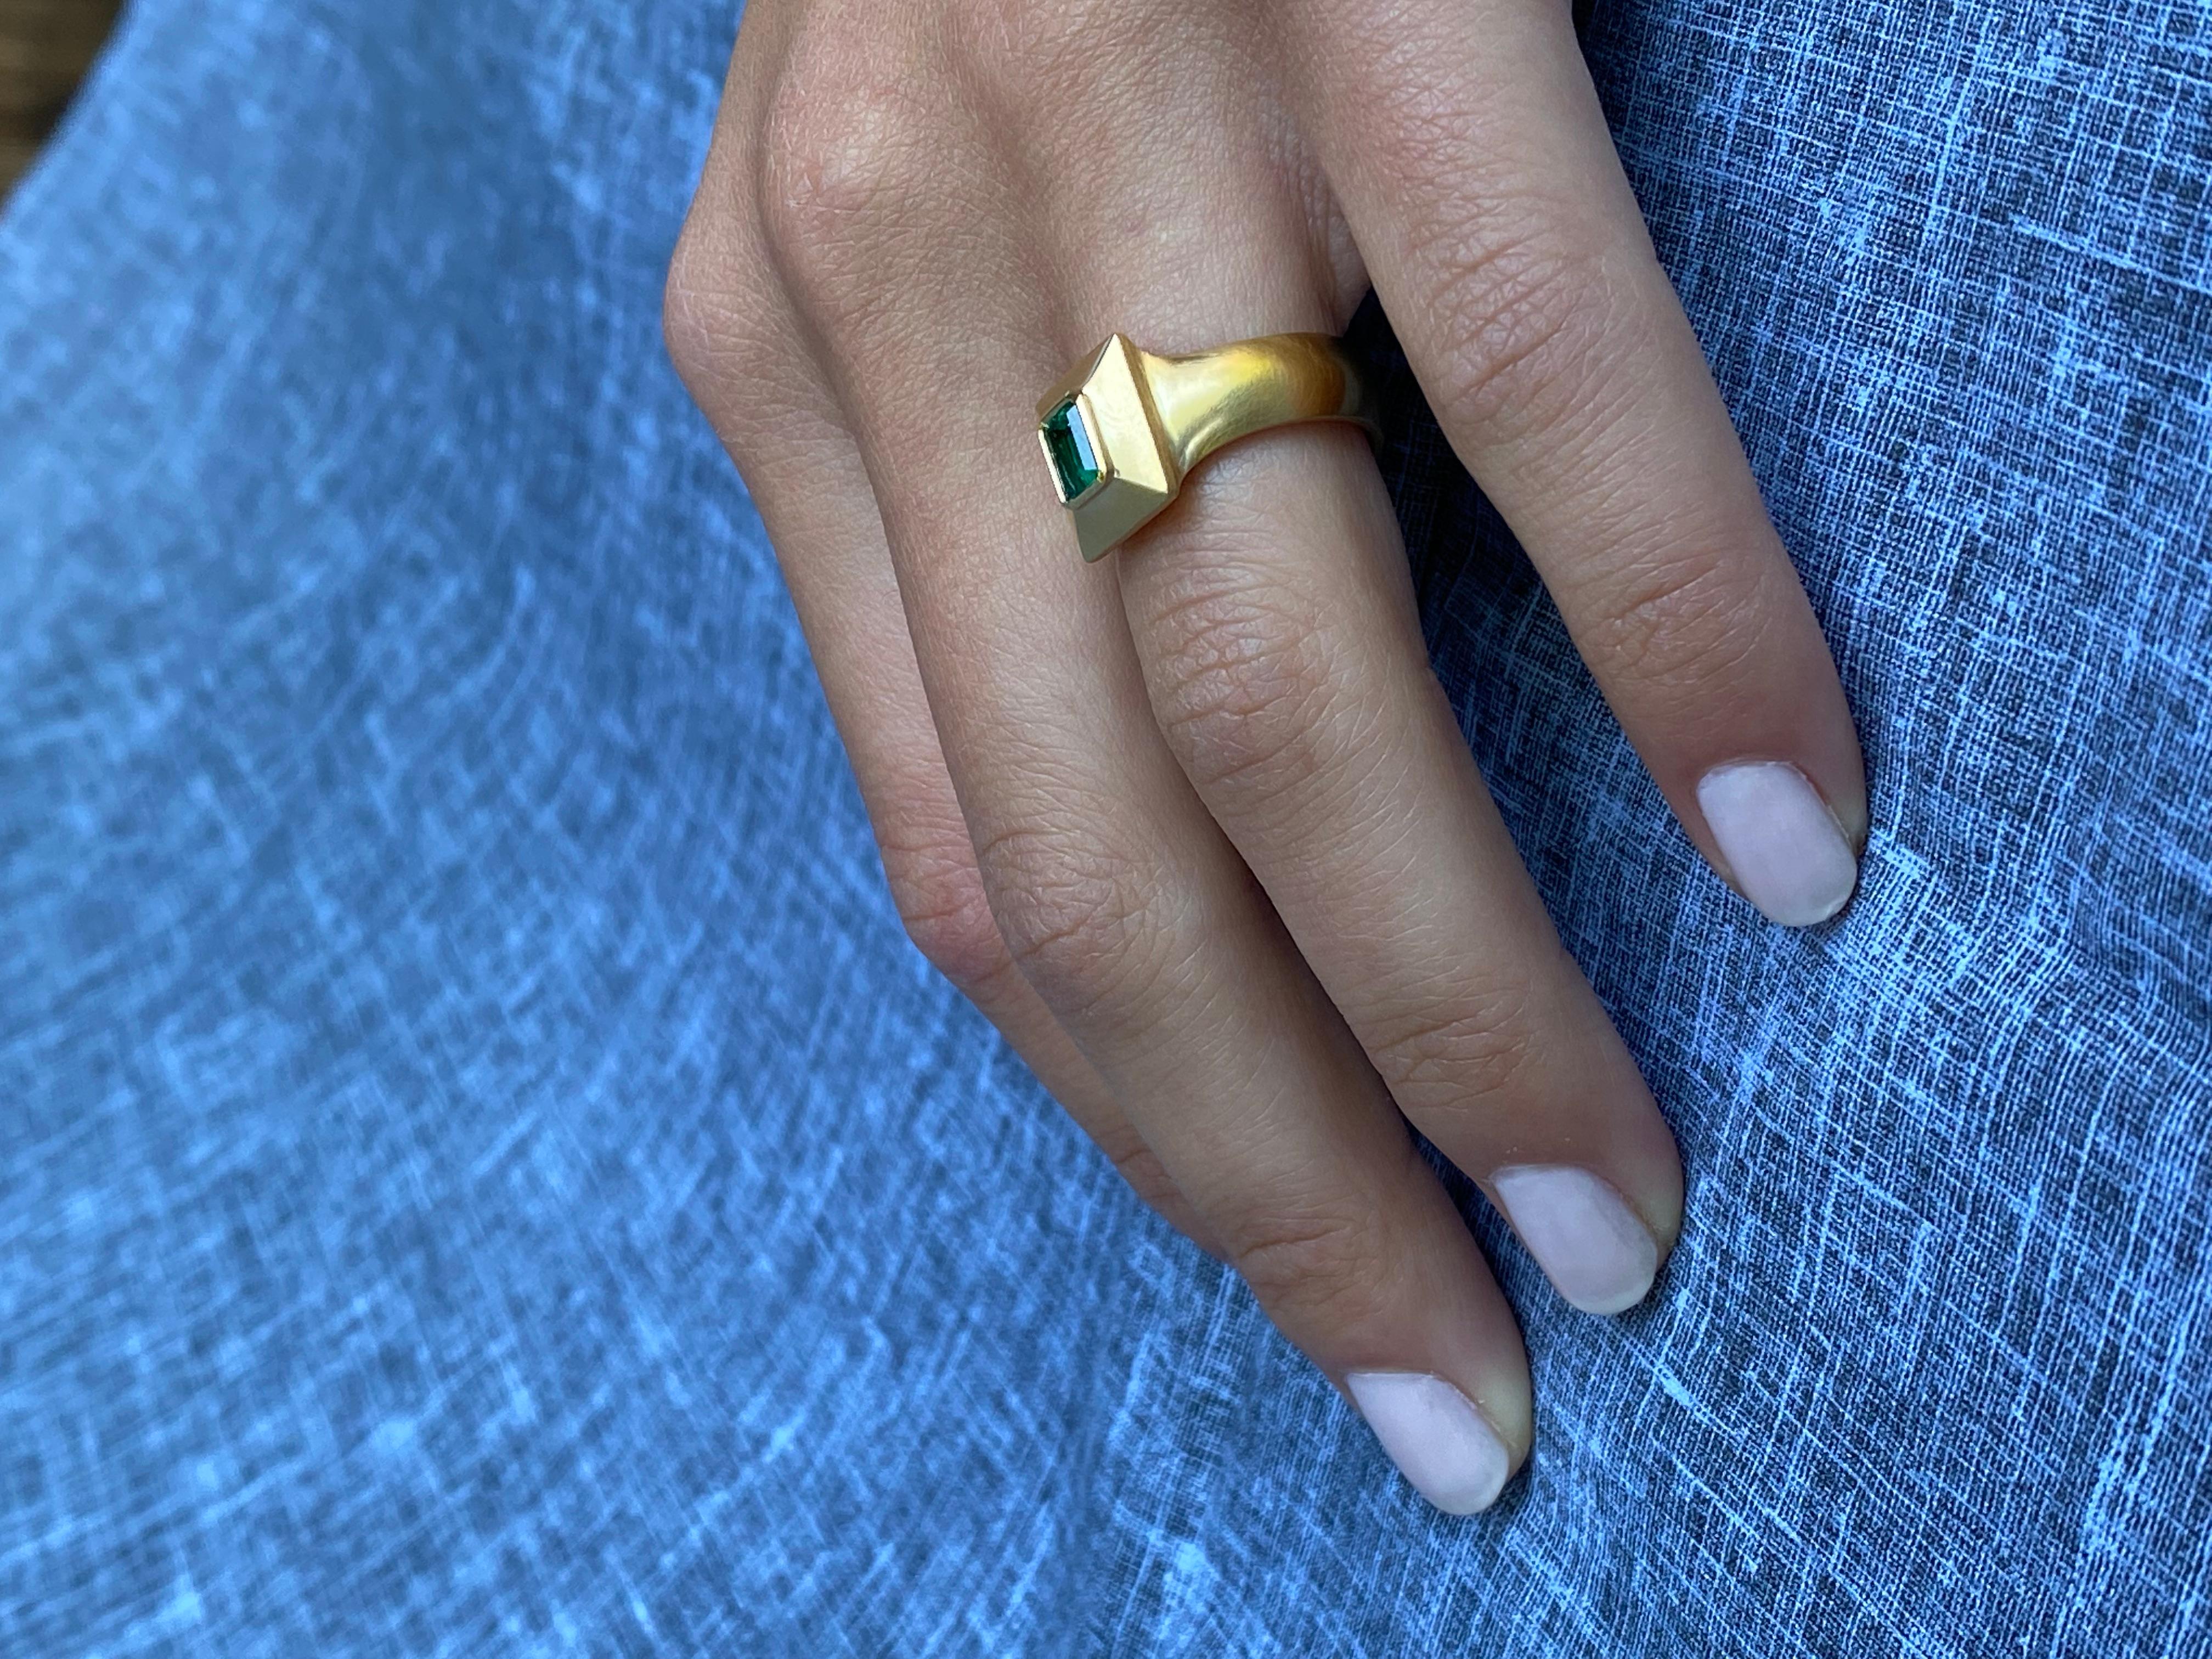 22k gold emerald ring